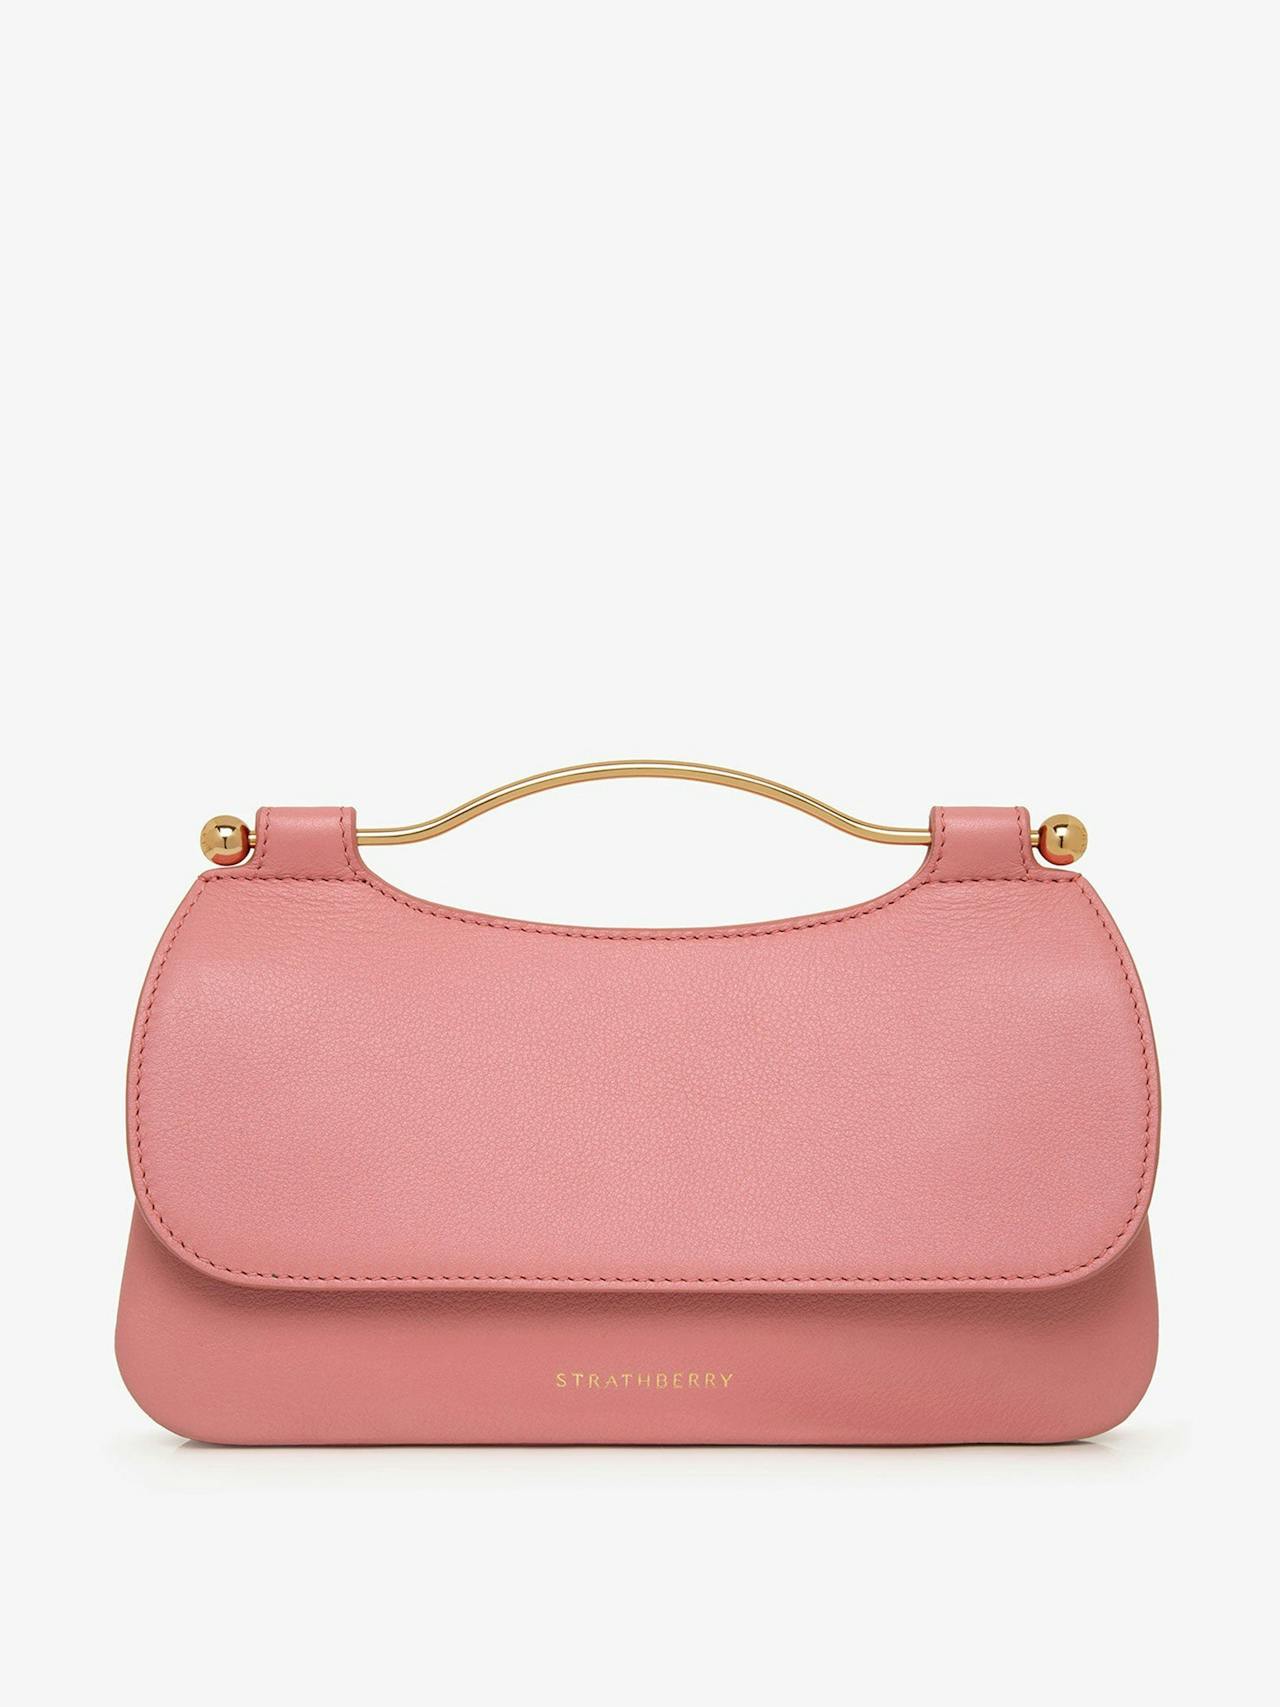 Candy pink Harmony bag